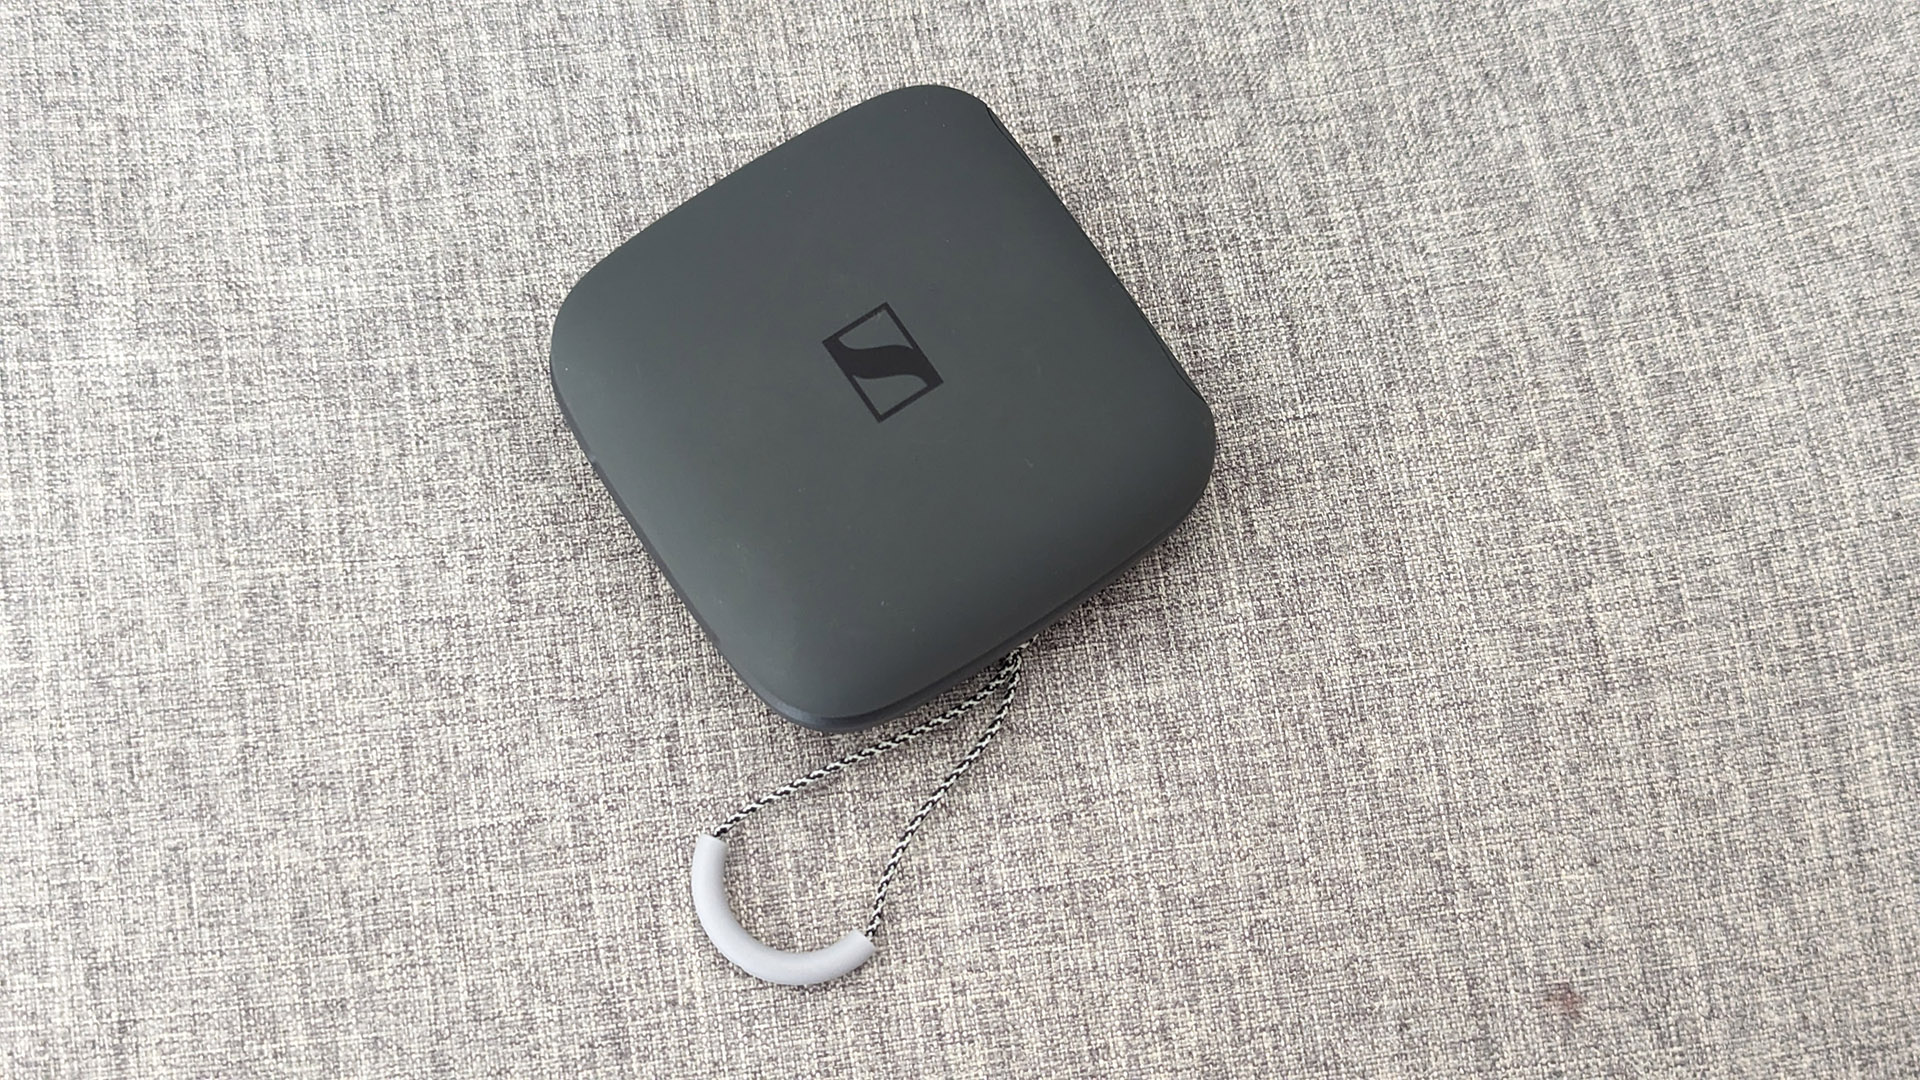 Sennheiser Momentum Sport in-ear headphones charging case on grey fabric background